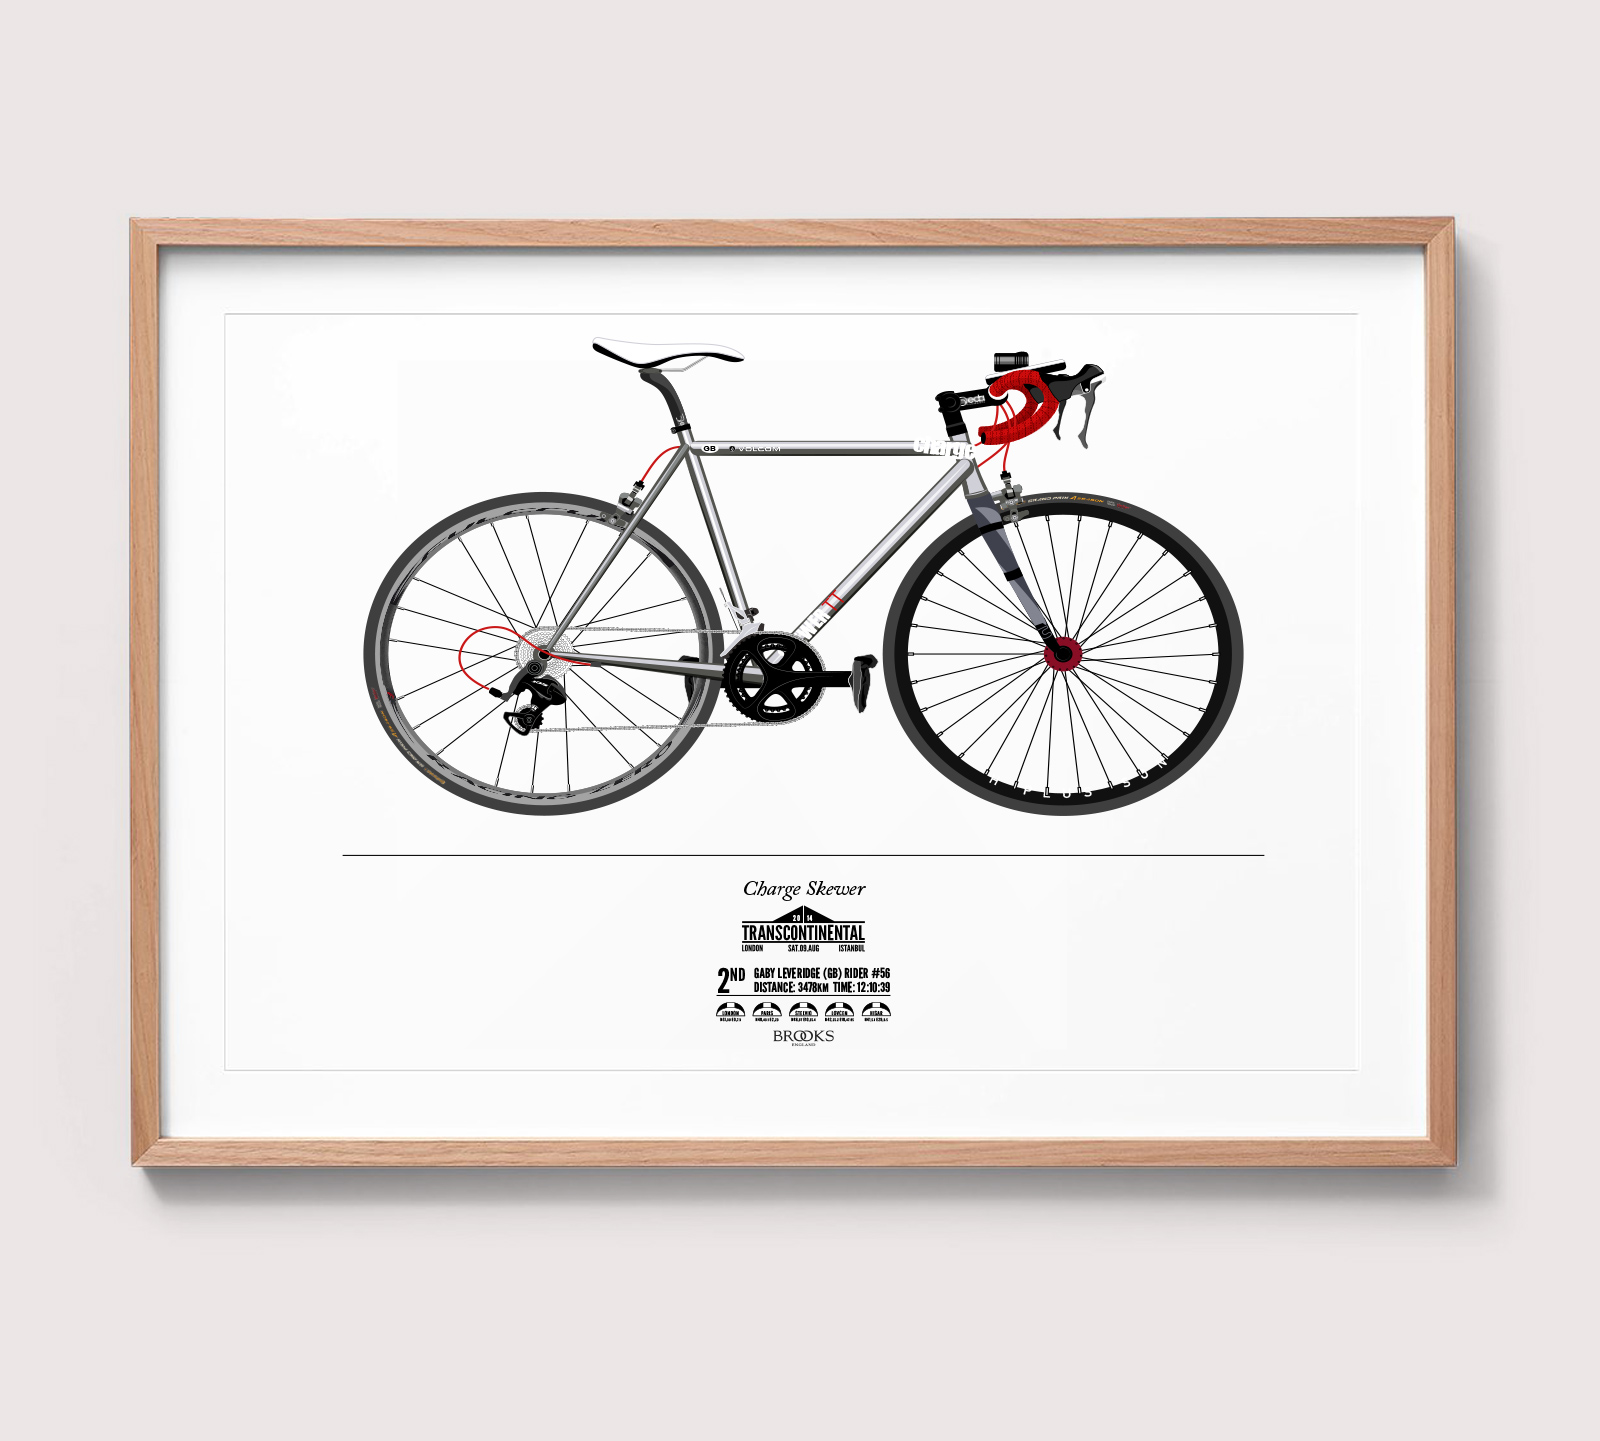 Card Artistry Printing - Printed Onto Bicycle - PrintbyMagic